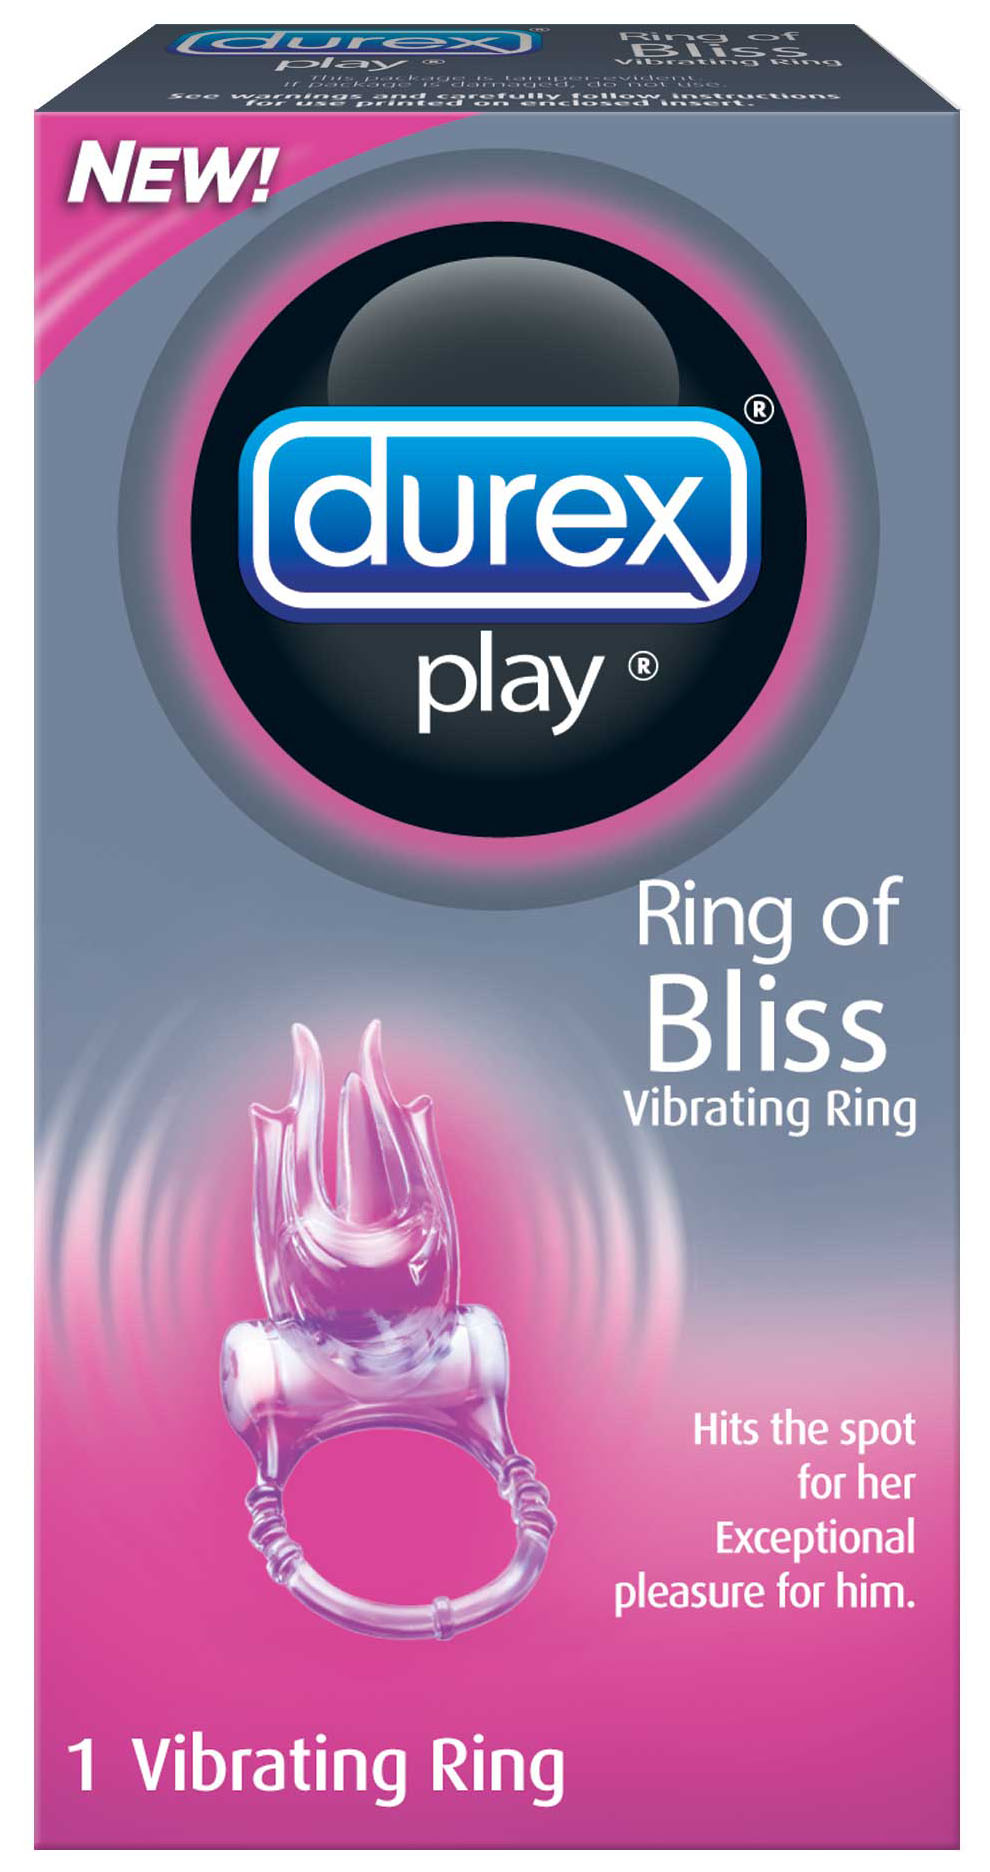 Durex play ring of bliss vibrating ring